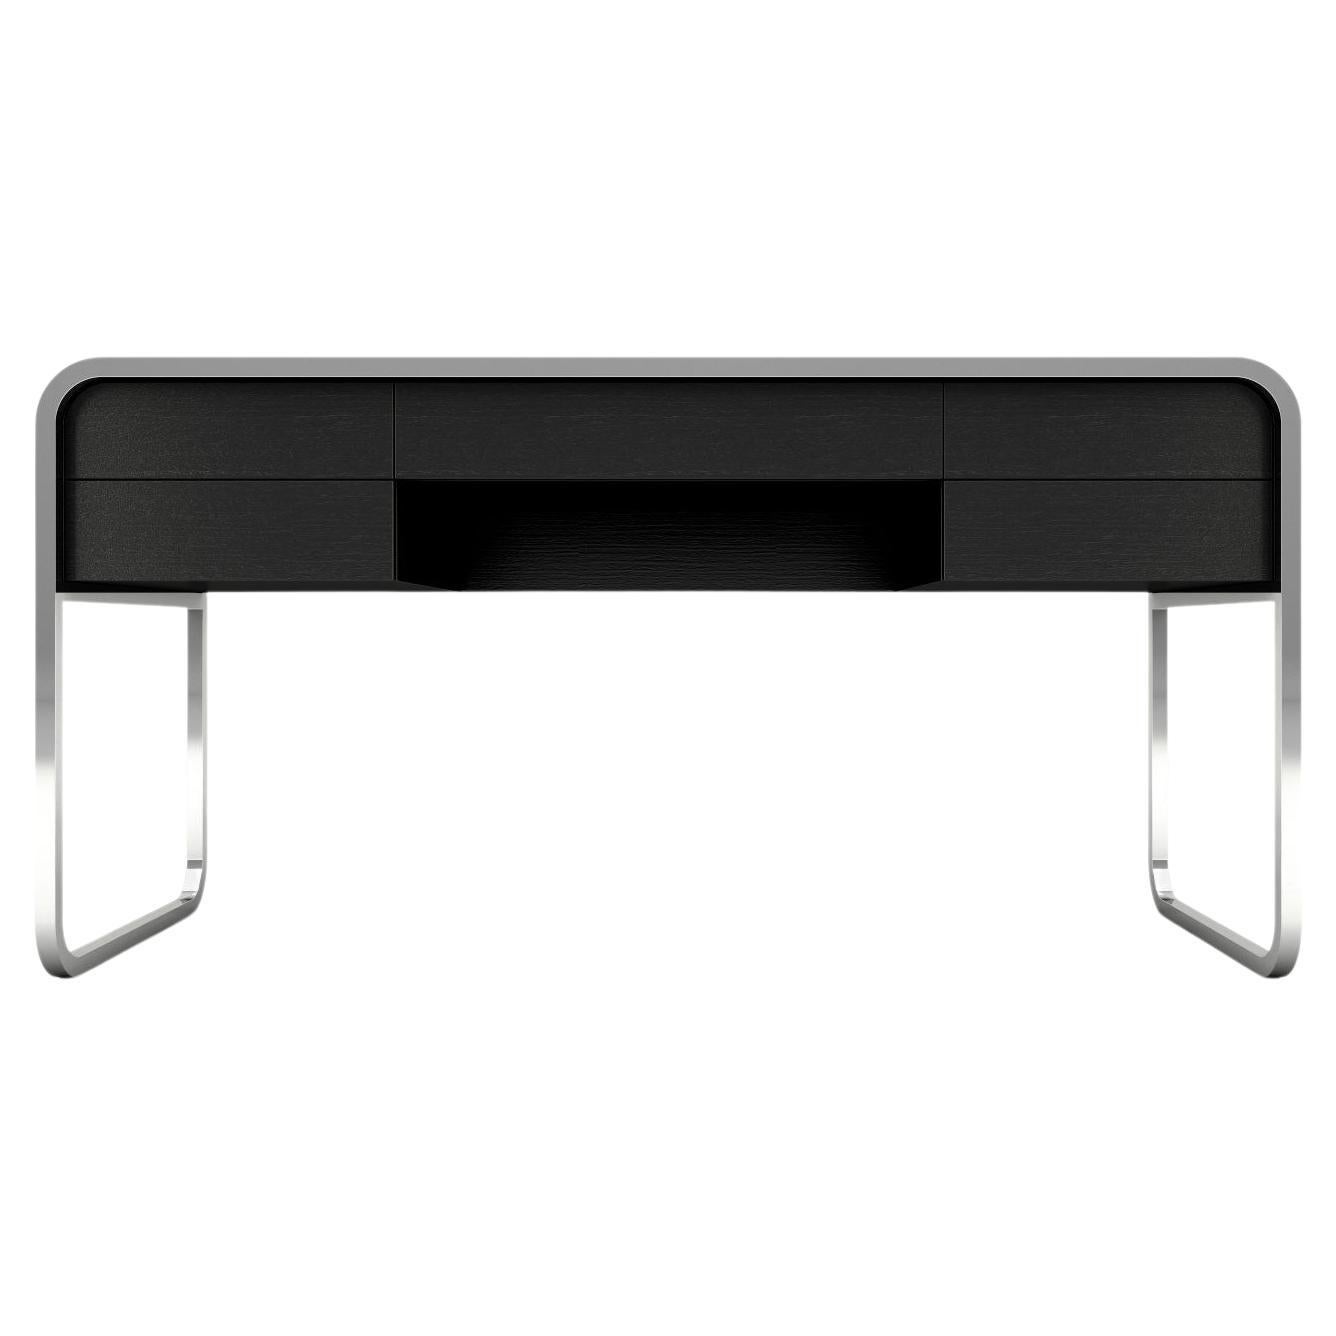 Midnight Desk - Bureau moderne laqué noir avec pieds en acier inoxydable en vente